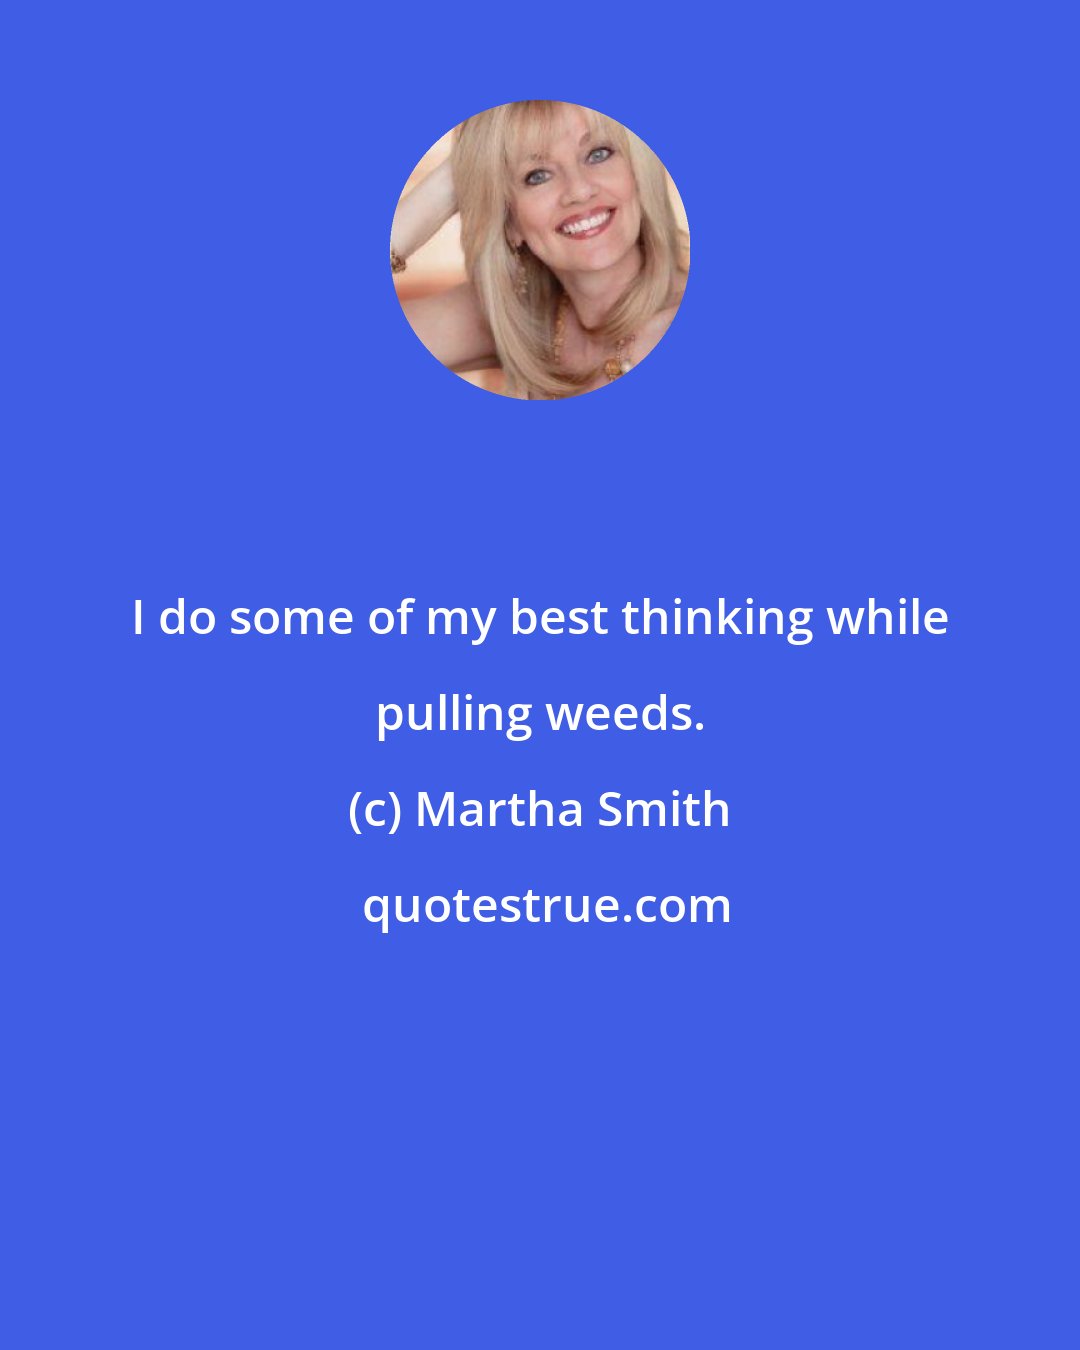 Martha Smith: I do some of my best thinking while pulling weeds.